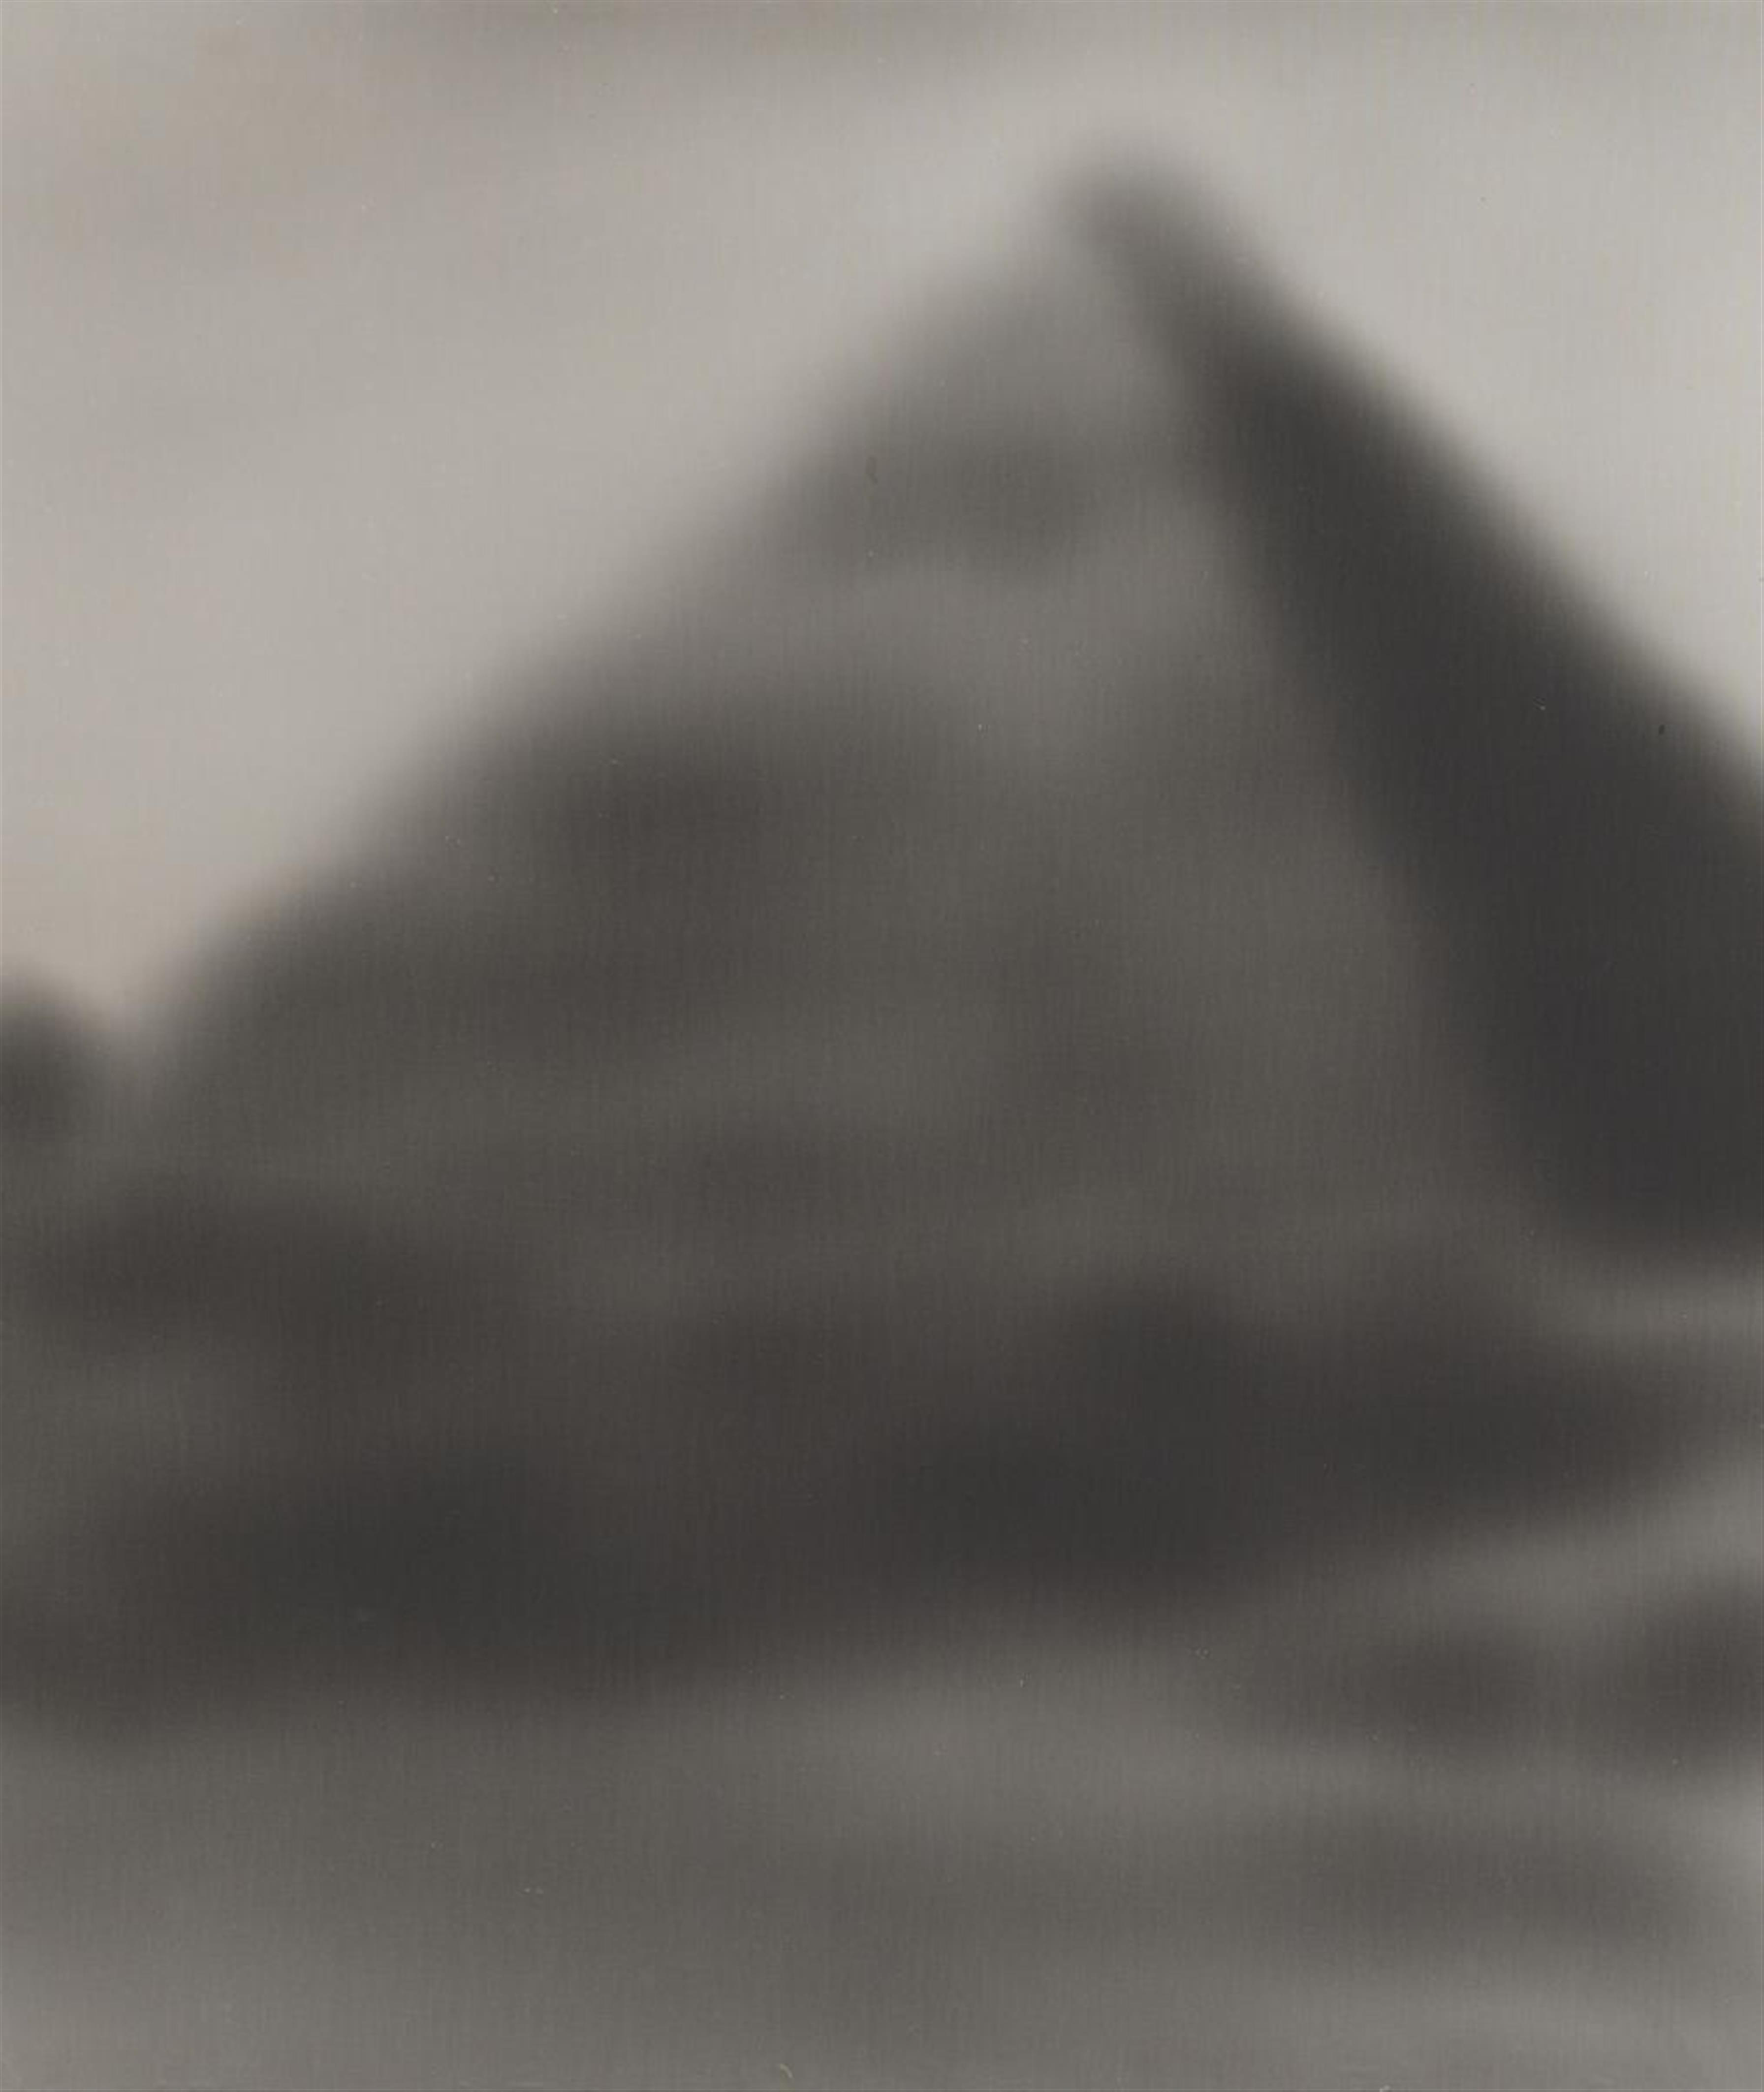 Gerhard Richter - Pyramid - image-2